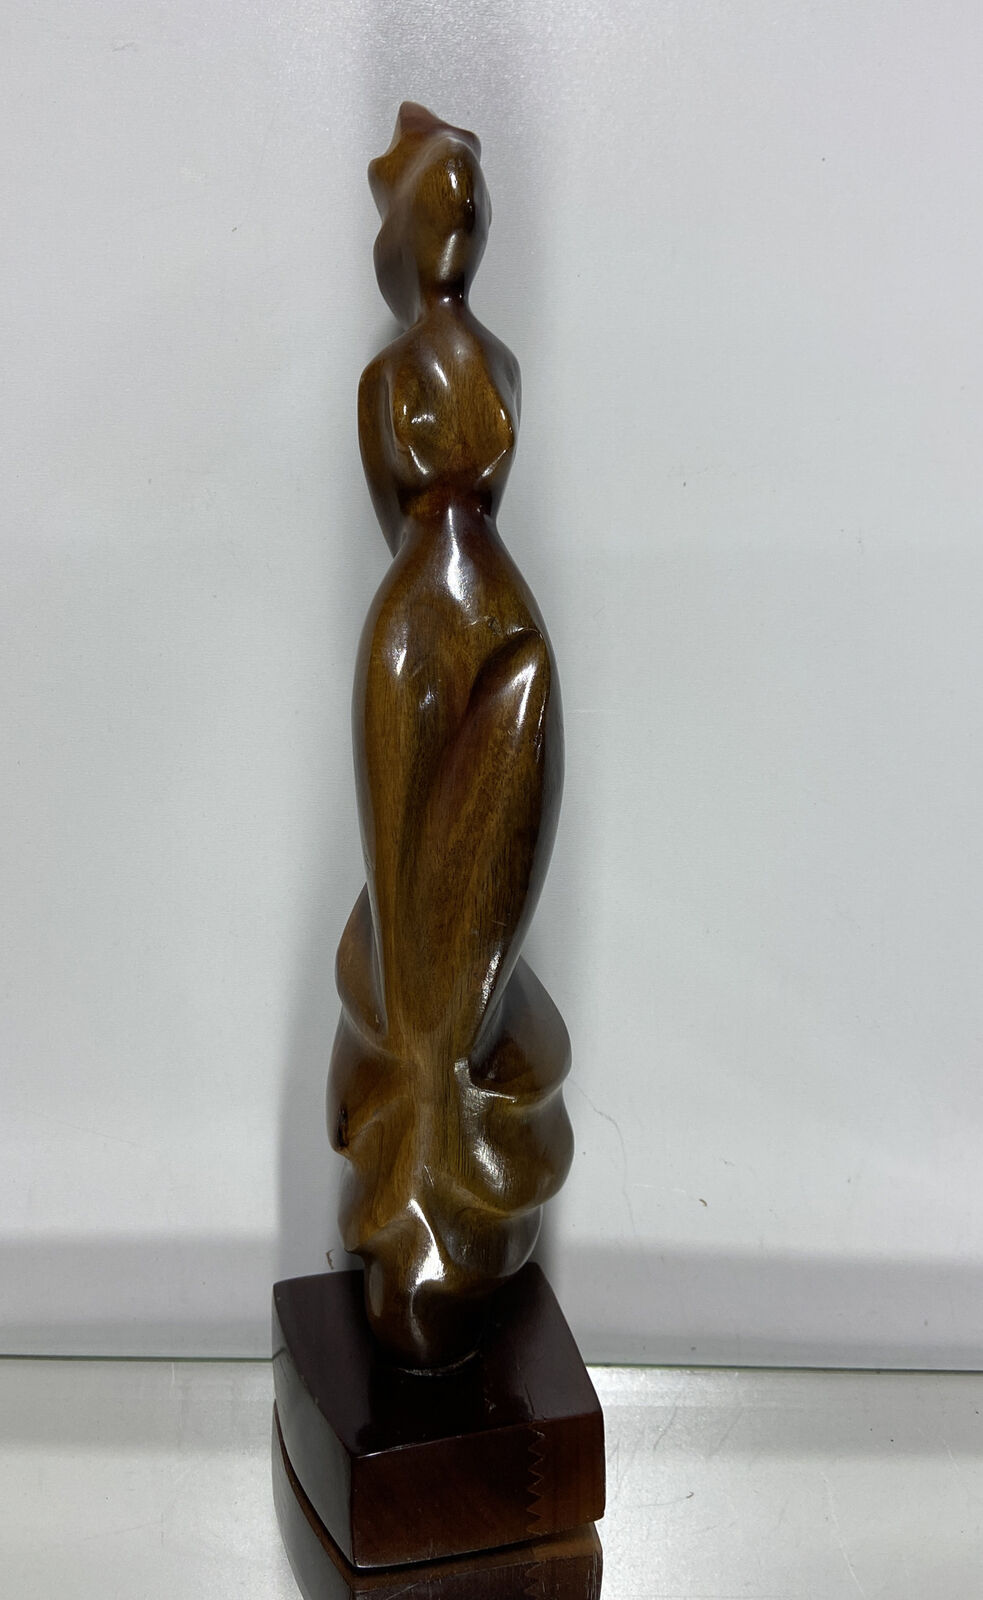 VTG Modernist Sculpture Mid Century Wood Carved figure Art Female abstract 